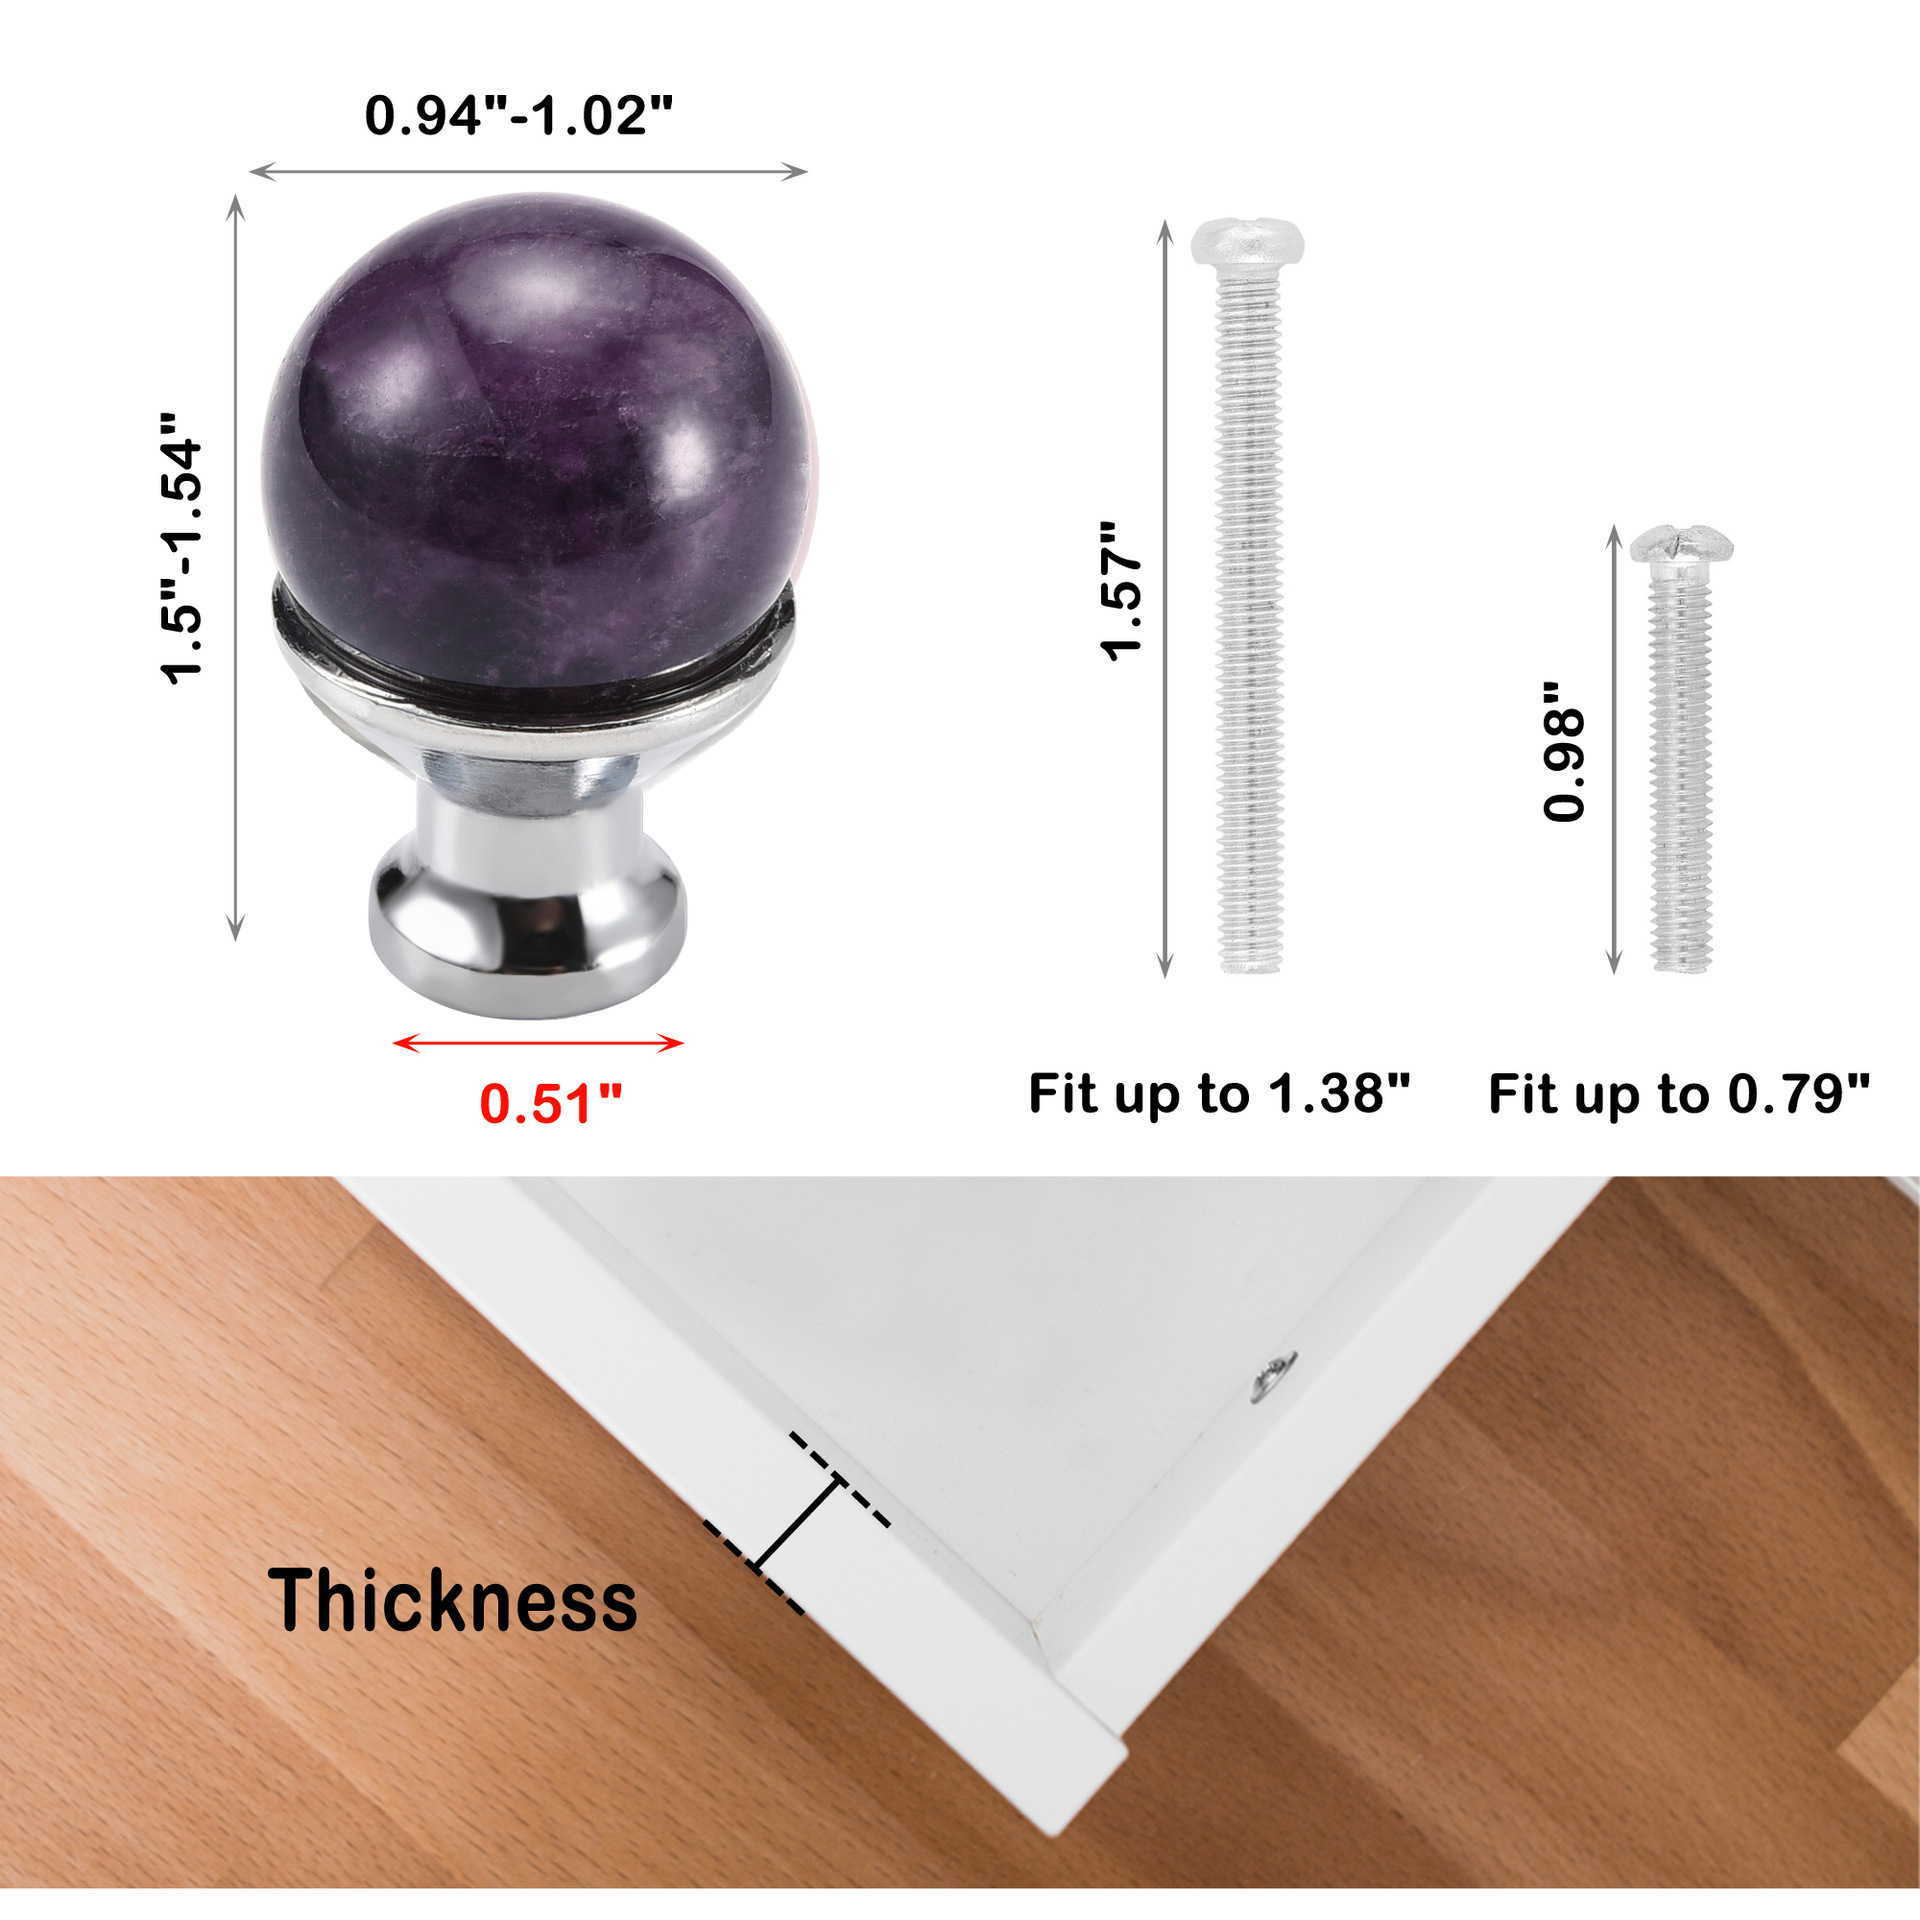 Amethyst sphere sizes range from 21-24mm